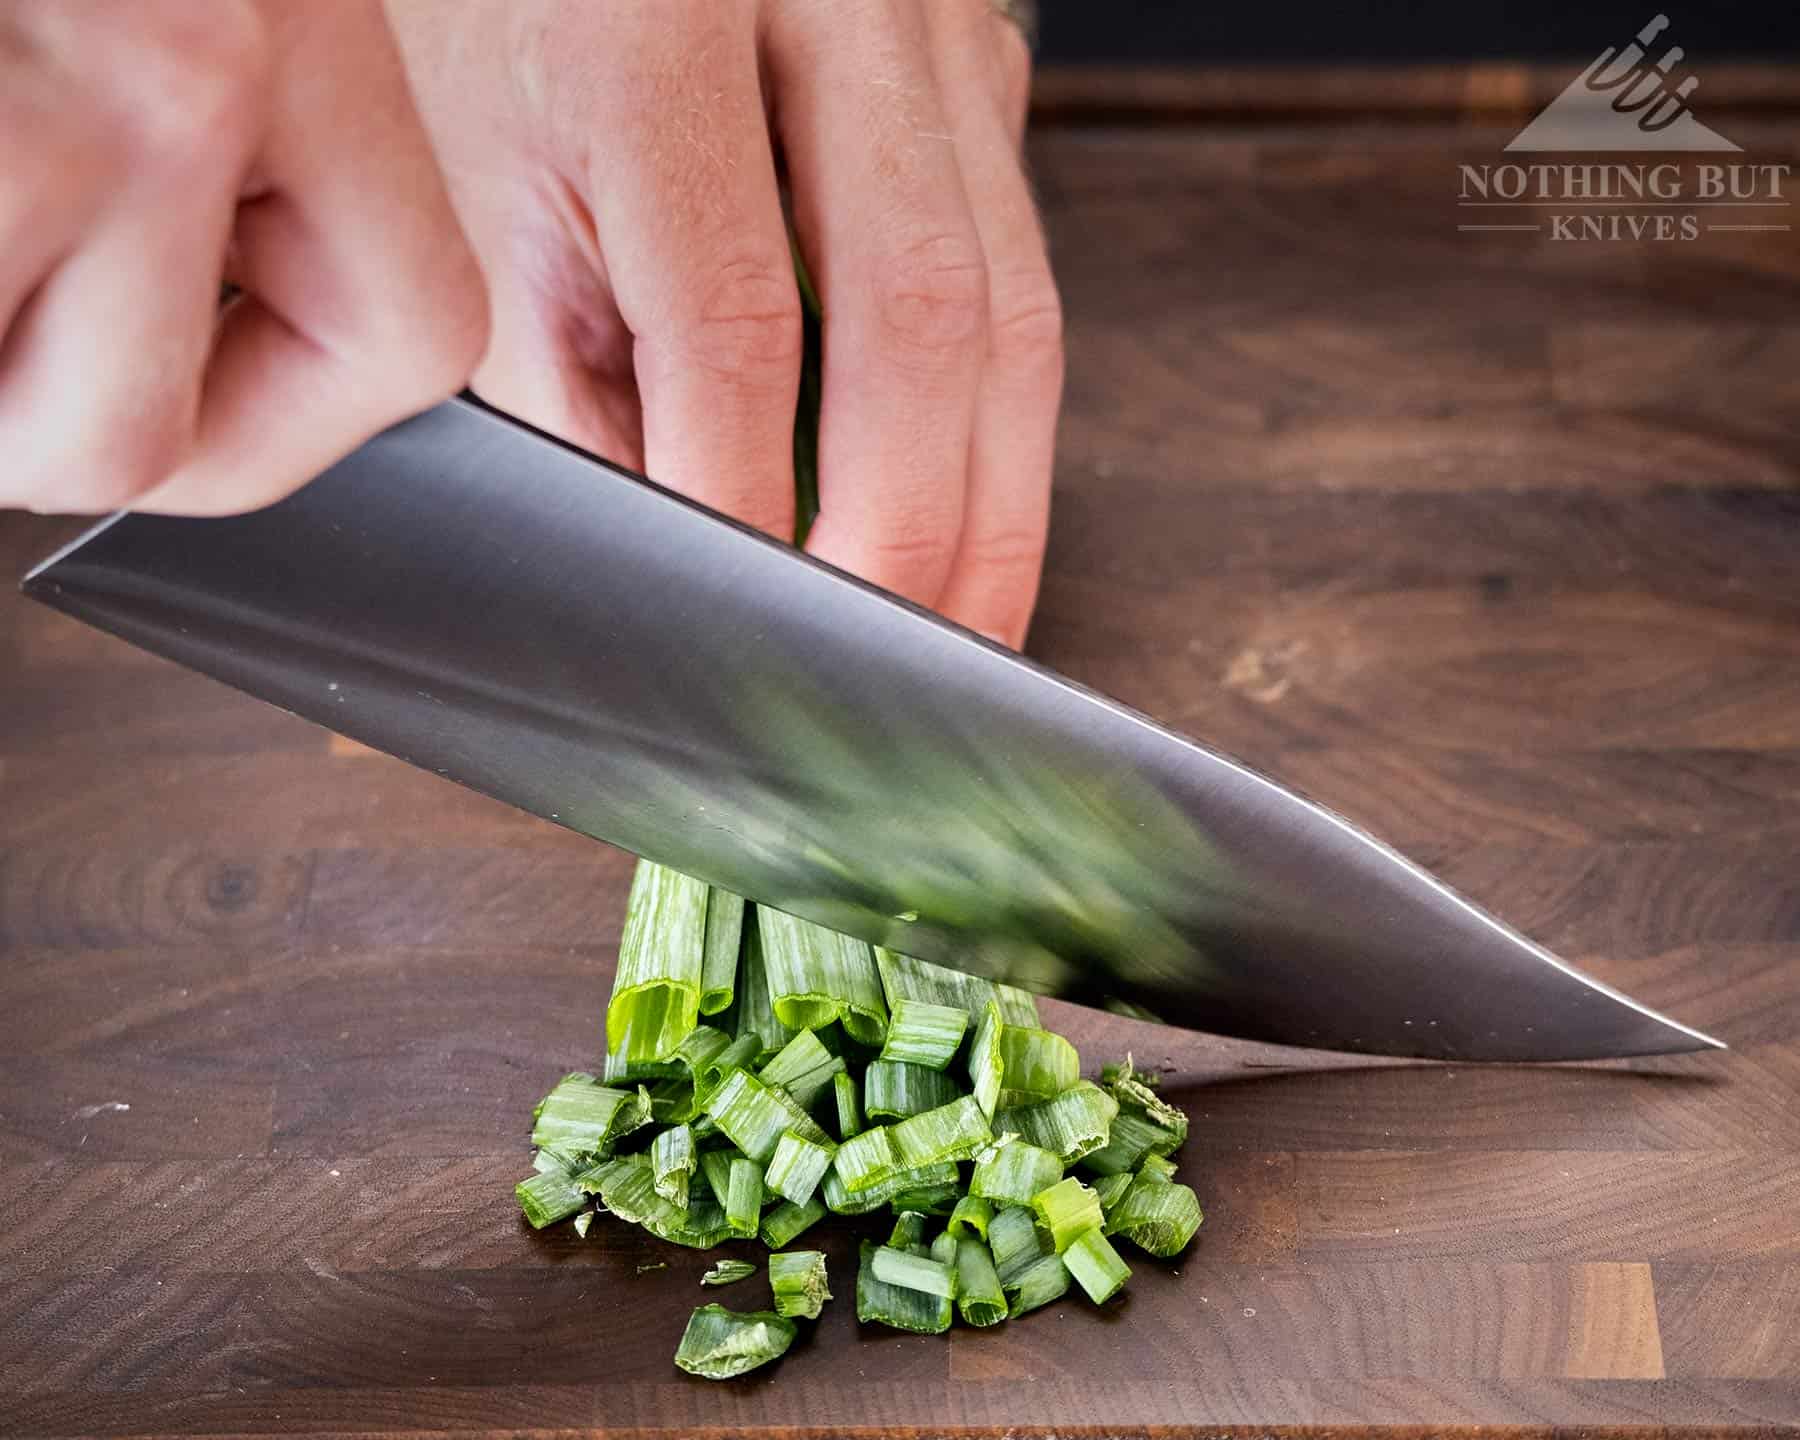 https://www.nothingbutknives.com/wp-content/uploads/2021/10/Mattia-Borrani-Chef-Knife-Chopping-Green-Onions-1.jpg